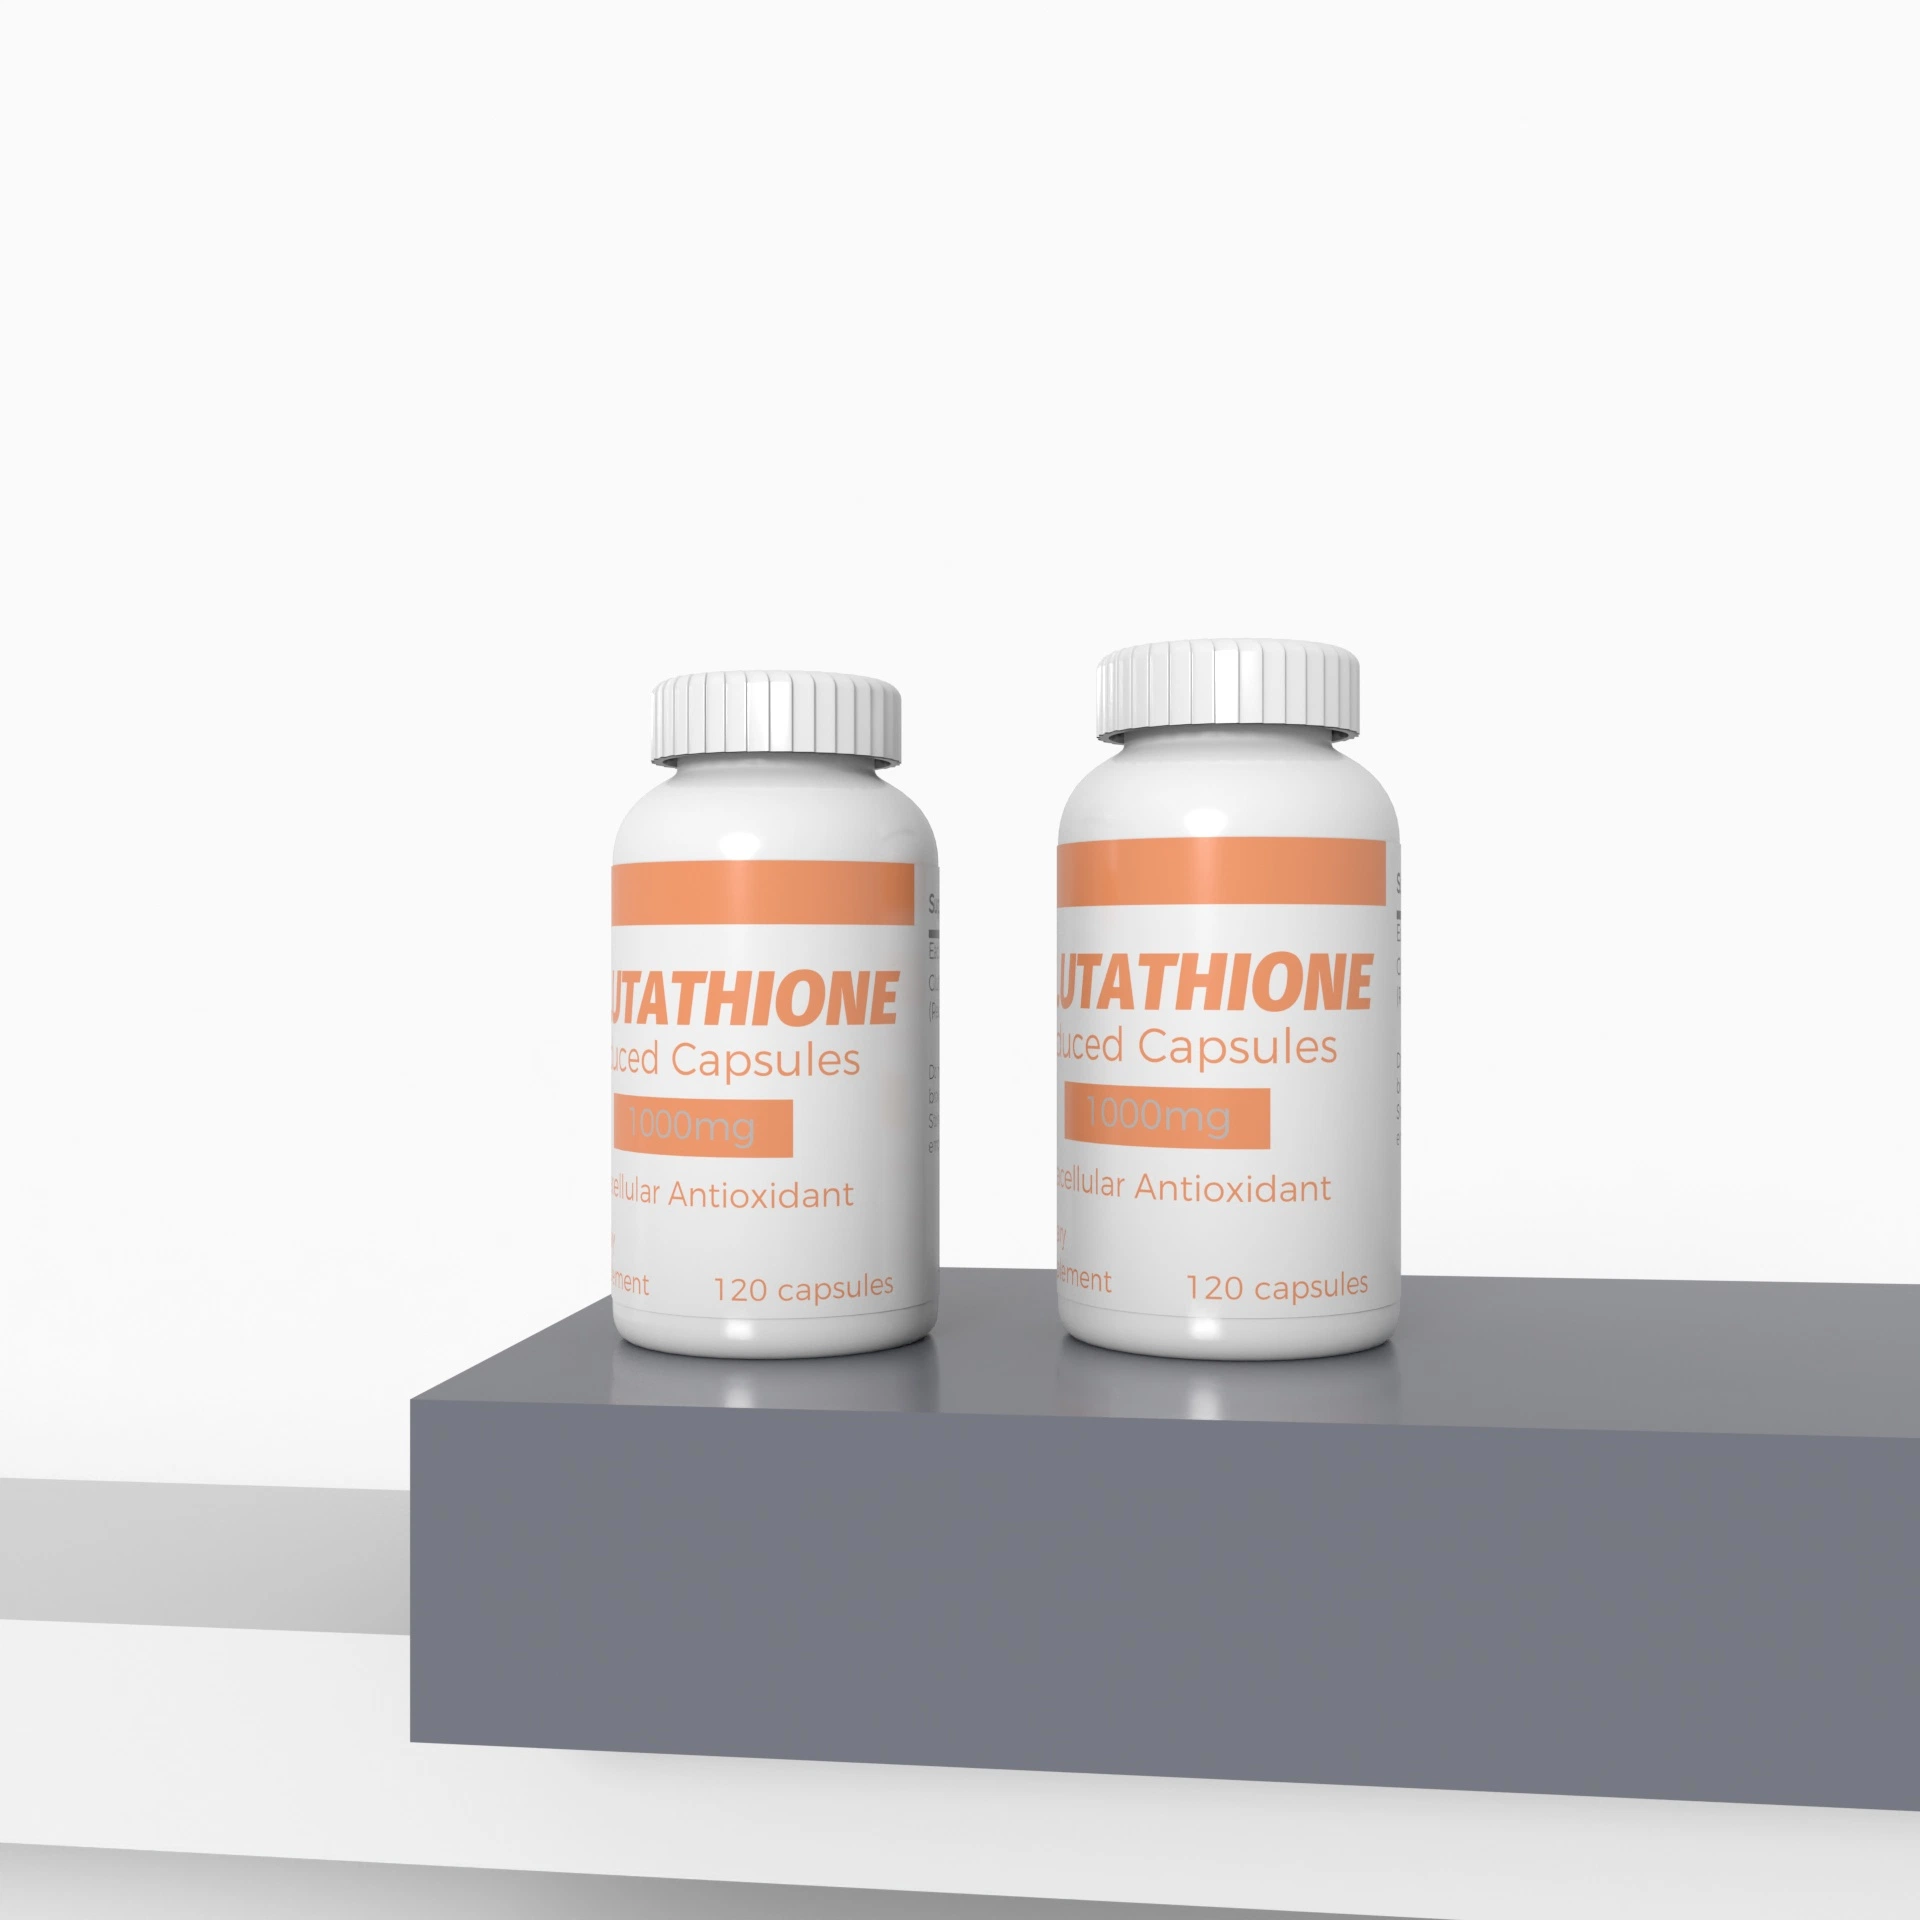 Healthcare Supplement Glutathione 1000mg Kapseln Whitening Skin Care Western Drugs Für Haut OEM Amino Acid Glutathion